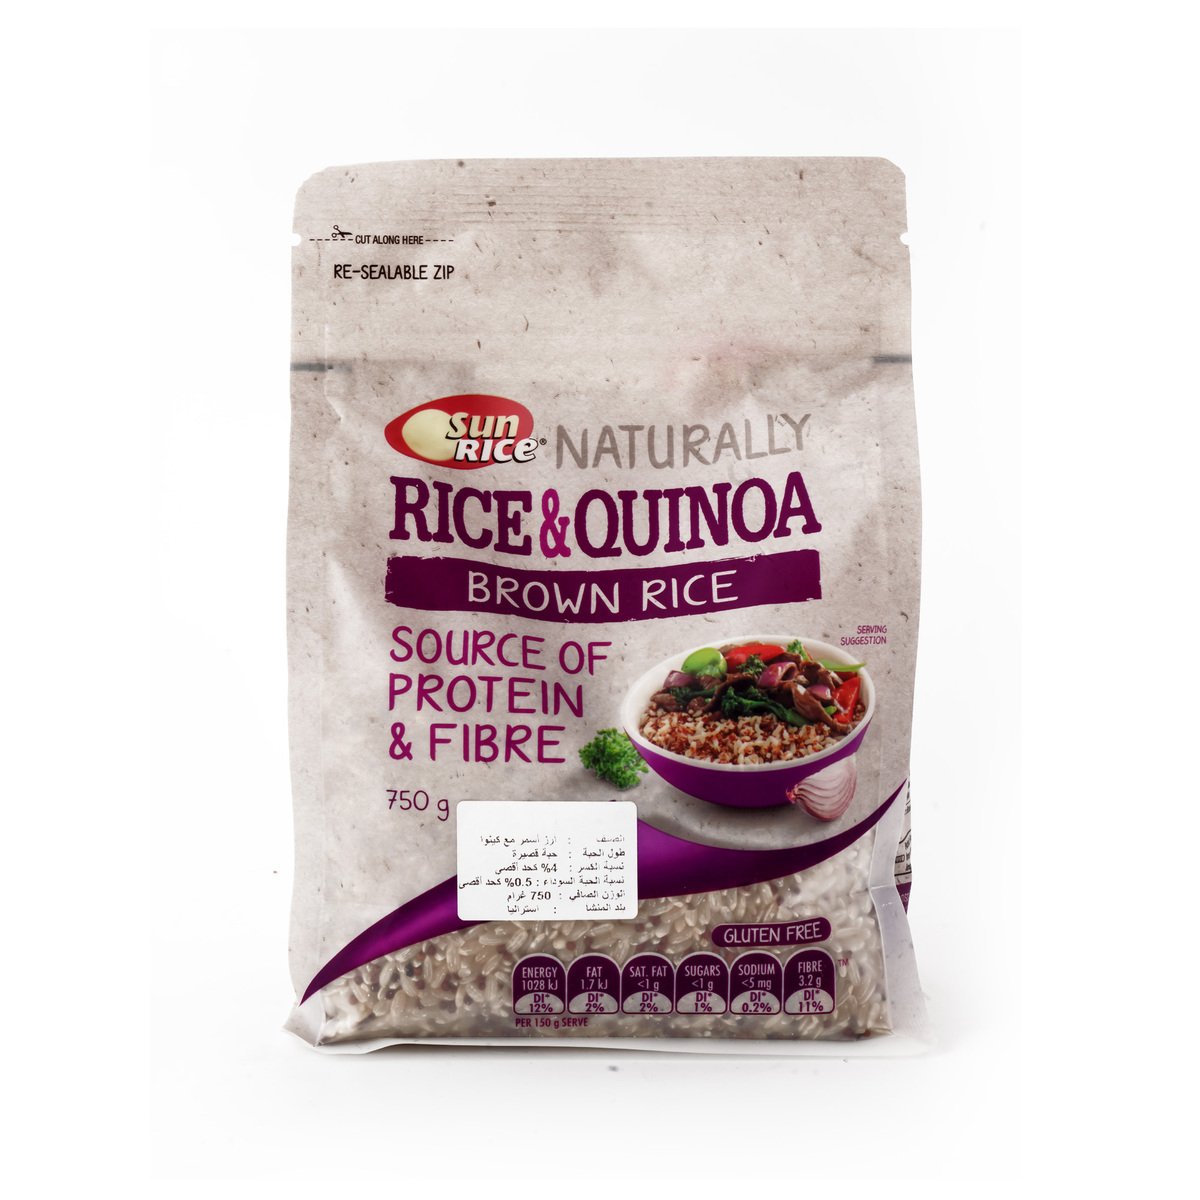 Sun Rice Naturally Rice & Quinoa Brown Rice 750 g